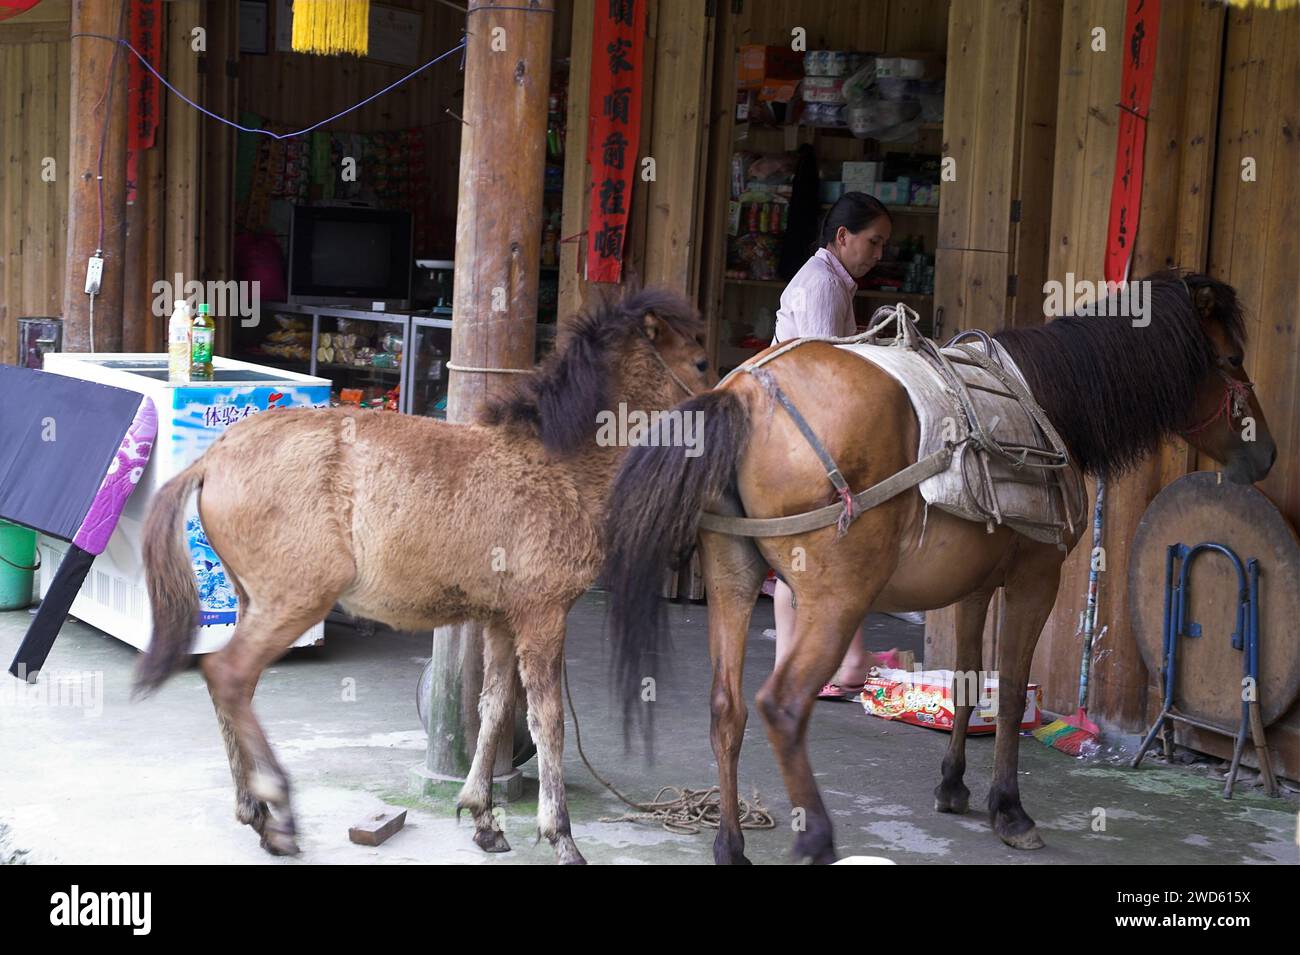 龙胜镇 (龙胜县) 中國 Longsheng, Dazhai Longji Ping'an Zhuang, China; Maultiere ruhen in einem chinesischen Dorf; Maultiere ruhen in einem chinesischen Dorf Stockfoto